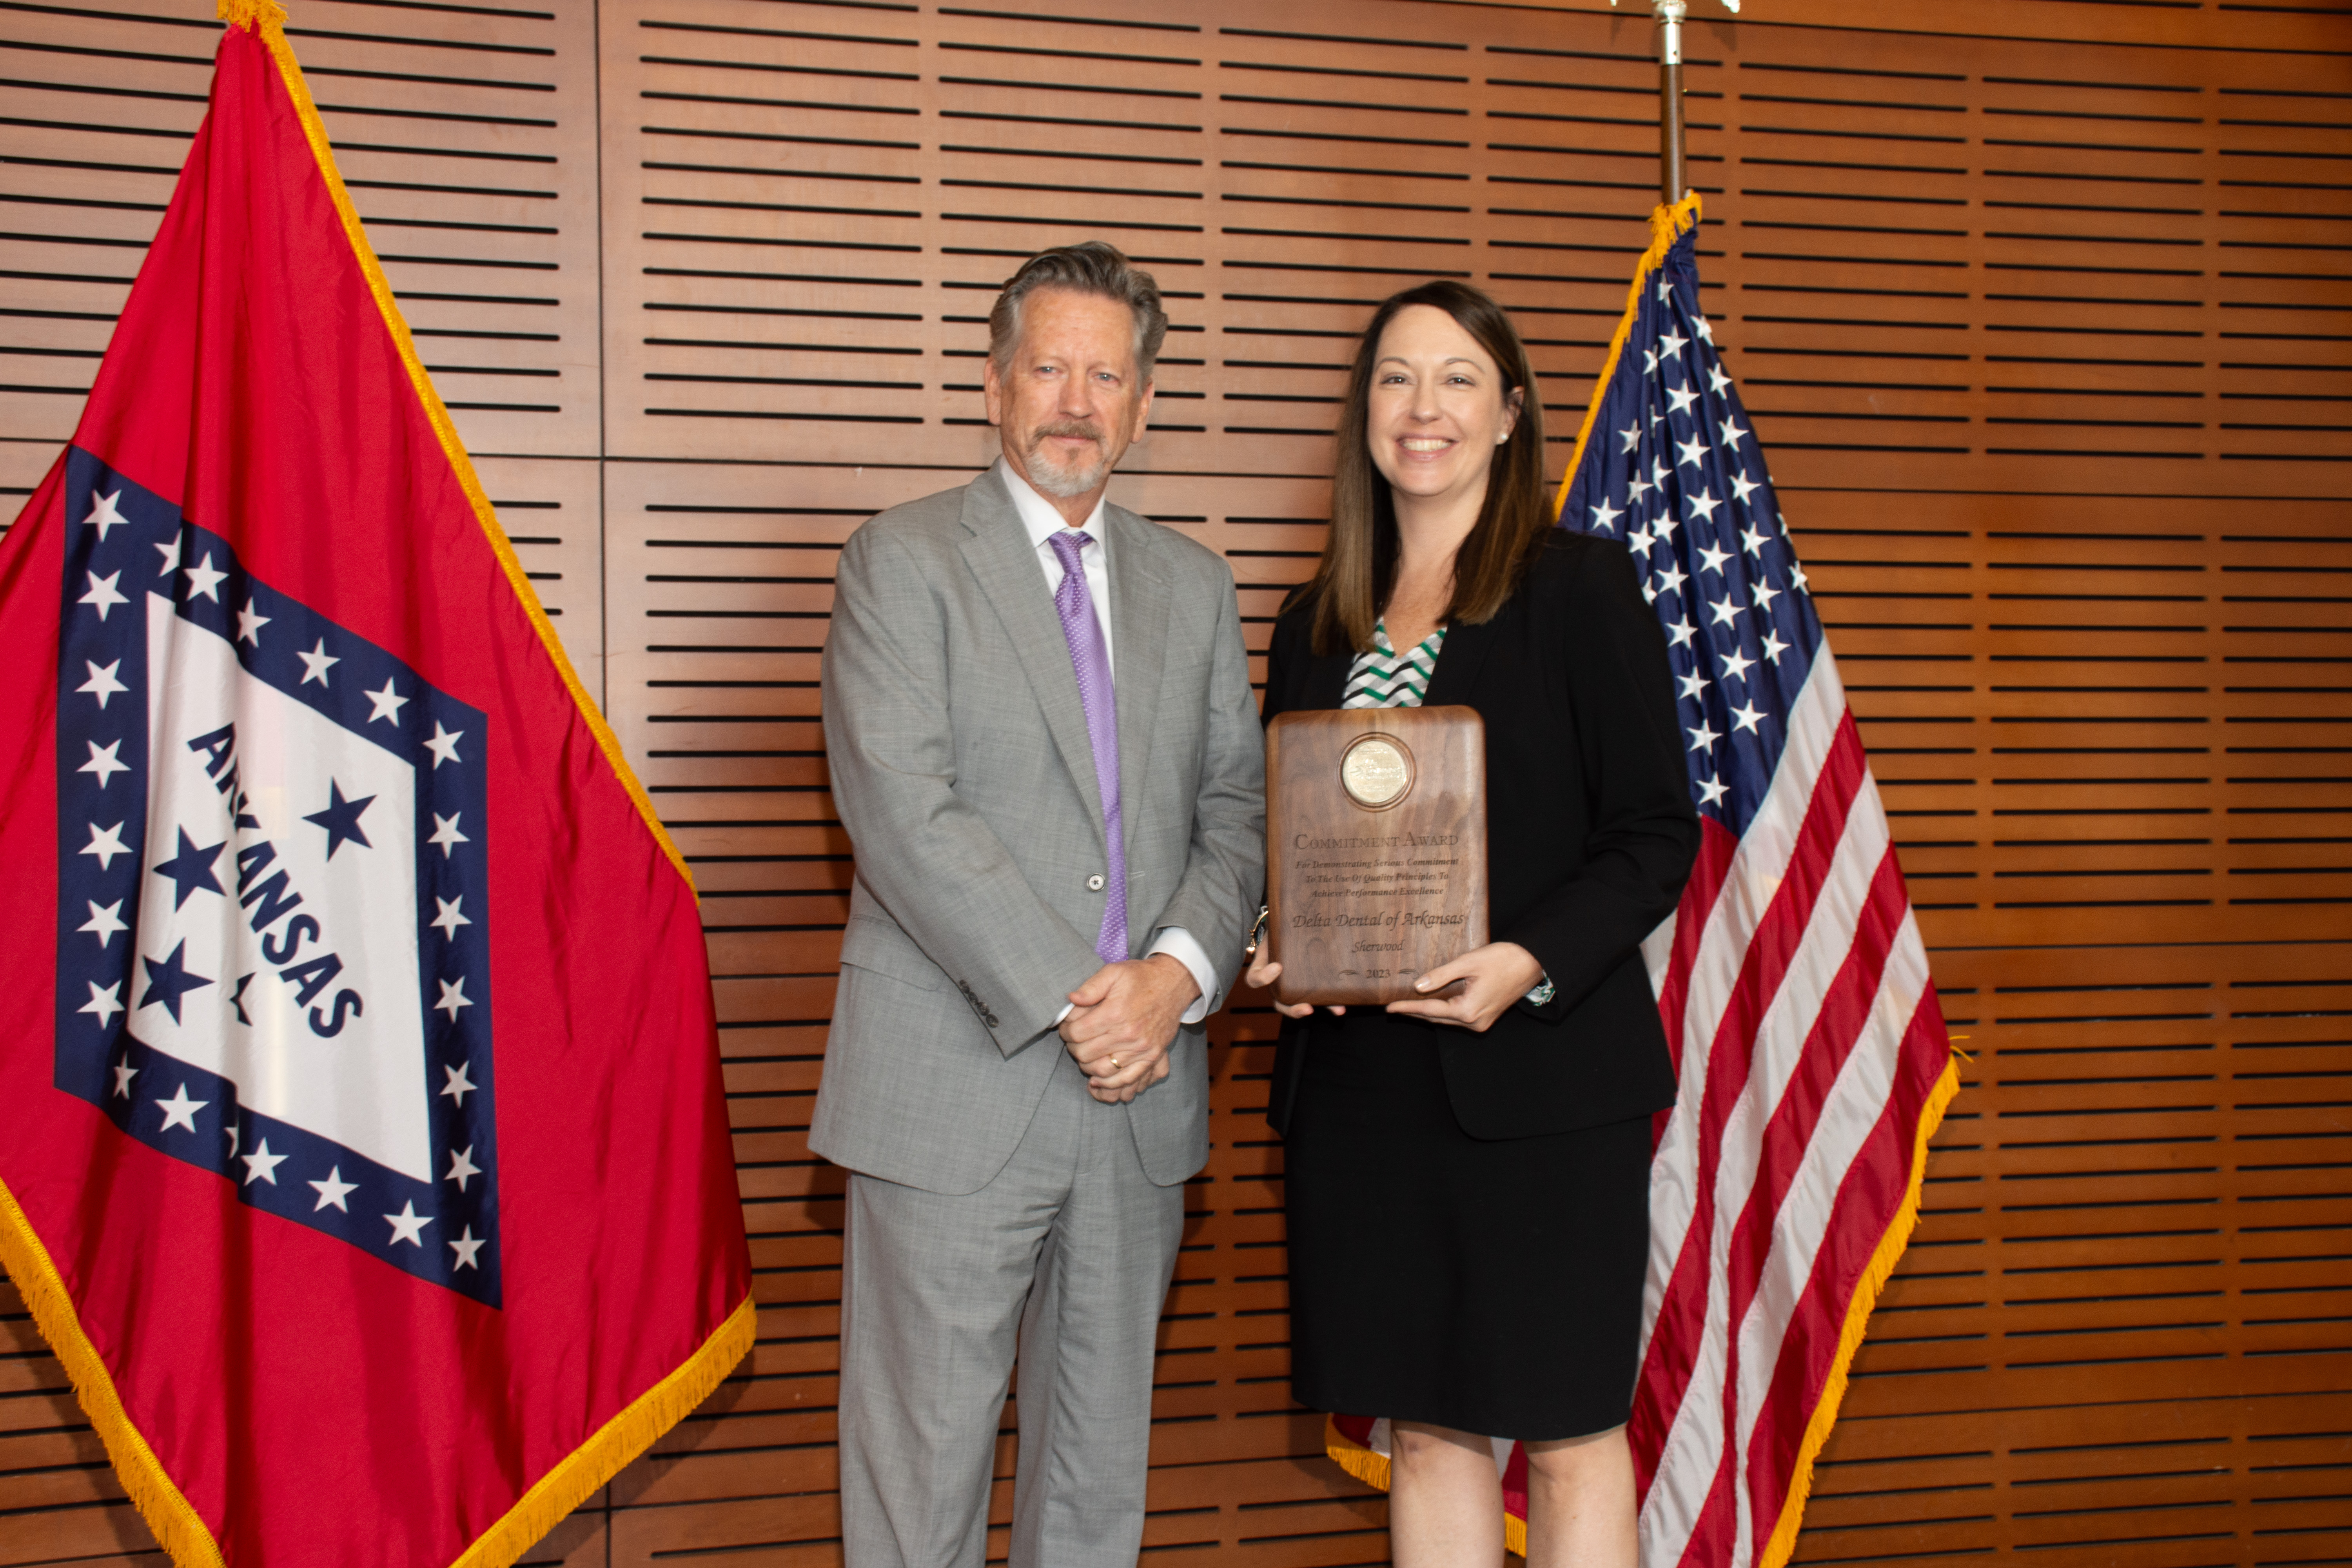 Jennifer Morales, VP of Human Resources, accepted the award on behalf of Delta Dental of Arkansas